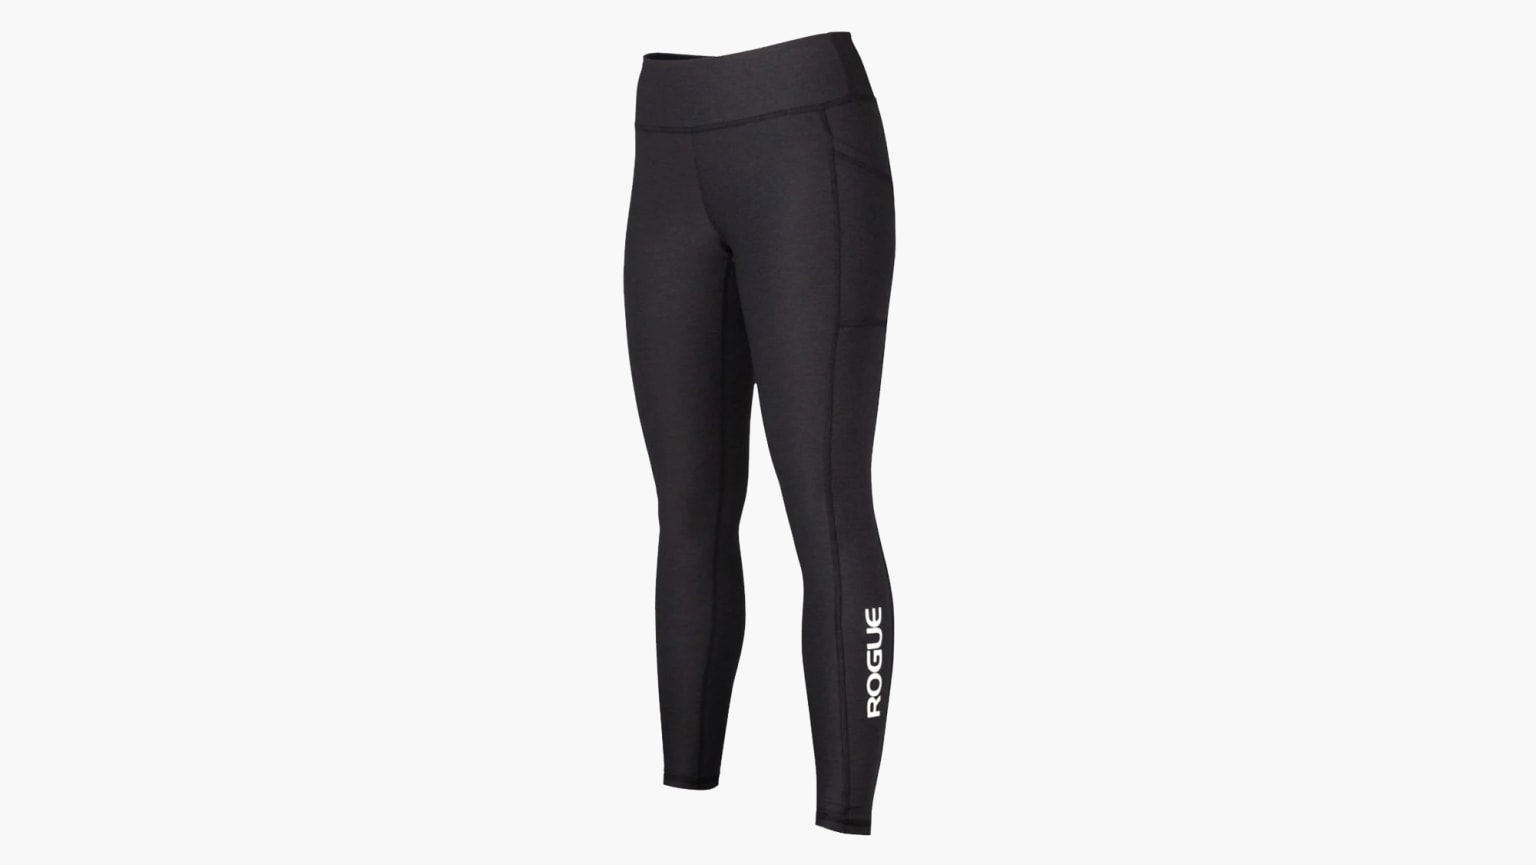 AGOGIE Resistance Pants Leggings +20 L Black Bands CrossFit Ruched Women  Weights | eBay